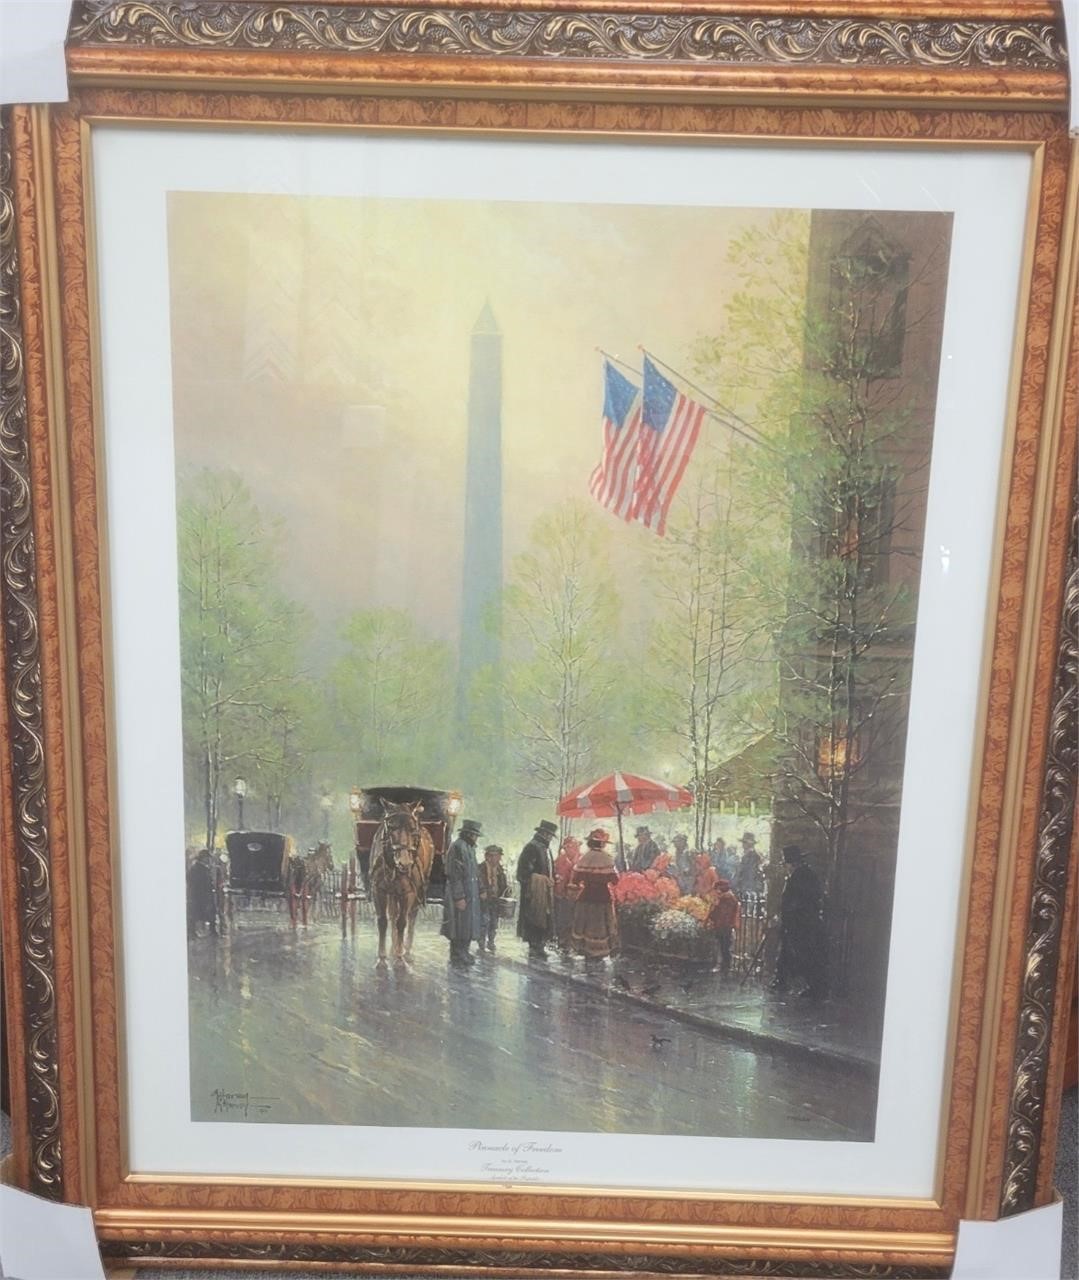 G HARVEY SIGNED ARTWORK "Pinnacle of Freedom"